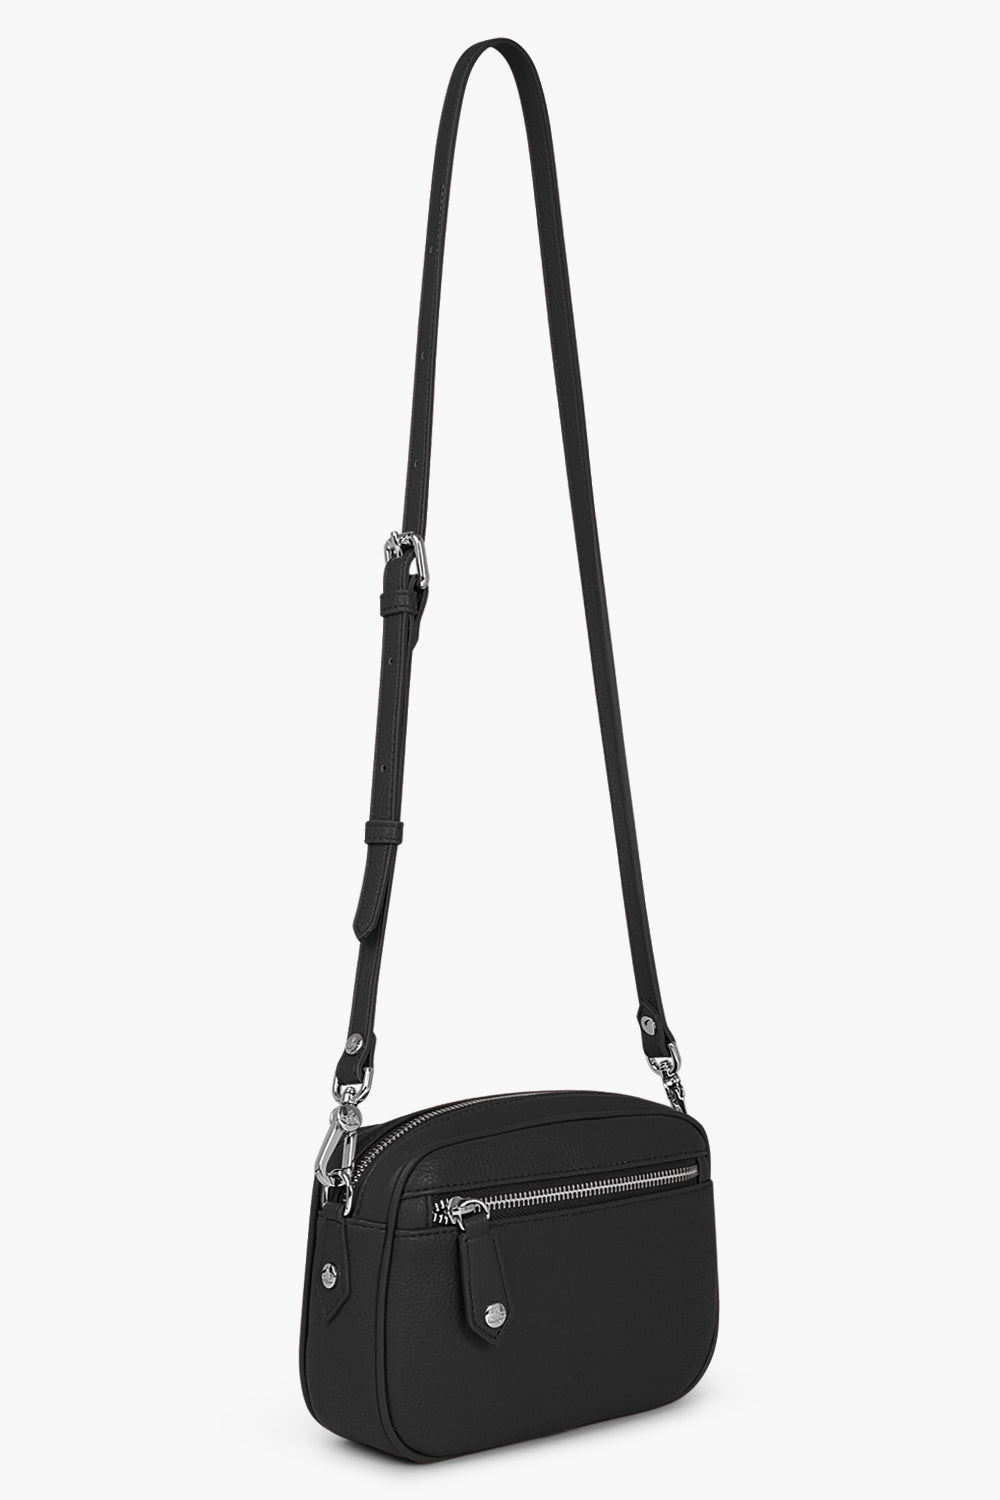 VIVIENNE WESTWOOD BAGS Black Anna Camera Bag | Black/Silver